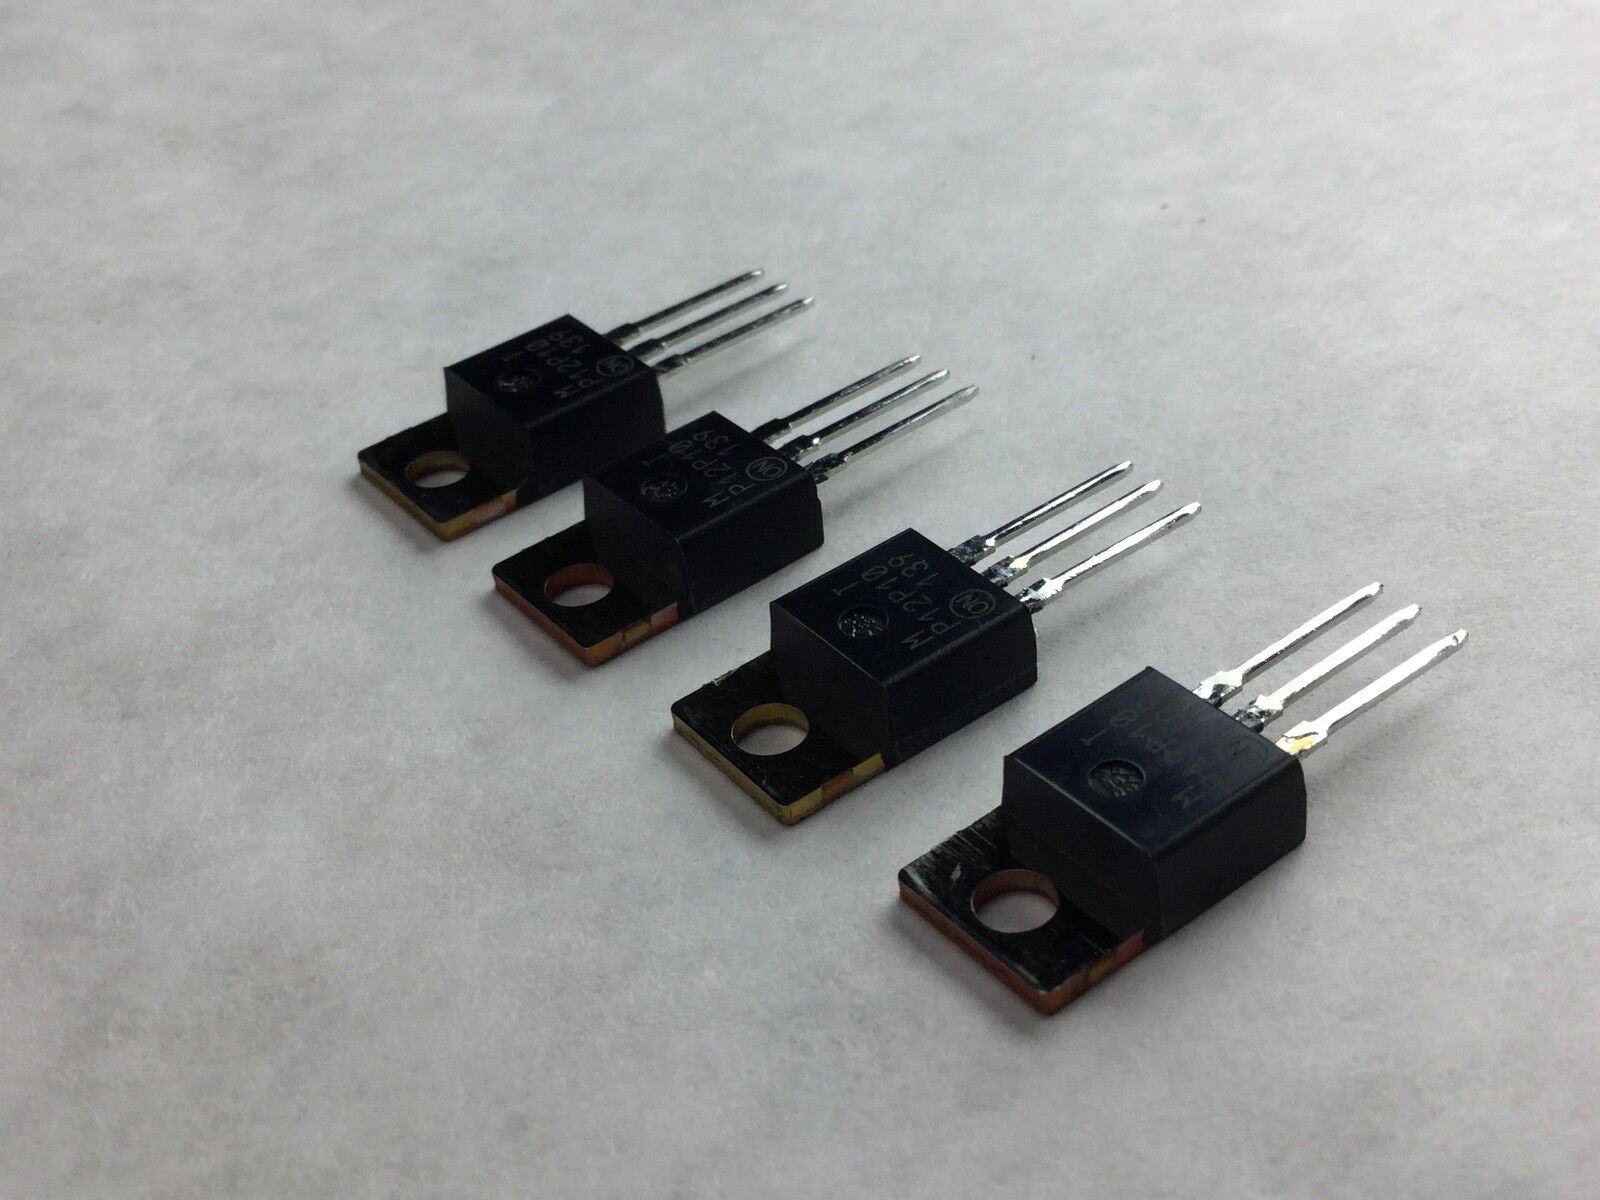 NEW P12P10 Transistor, Lot of 4, New